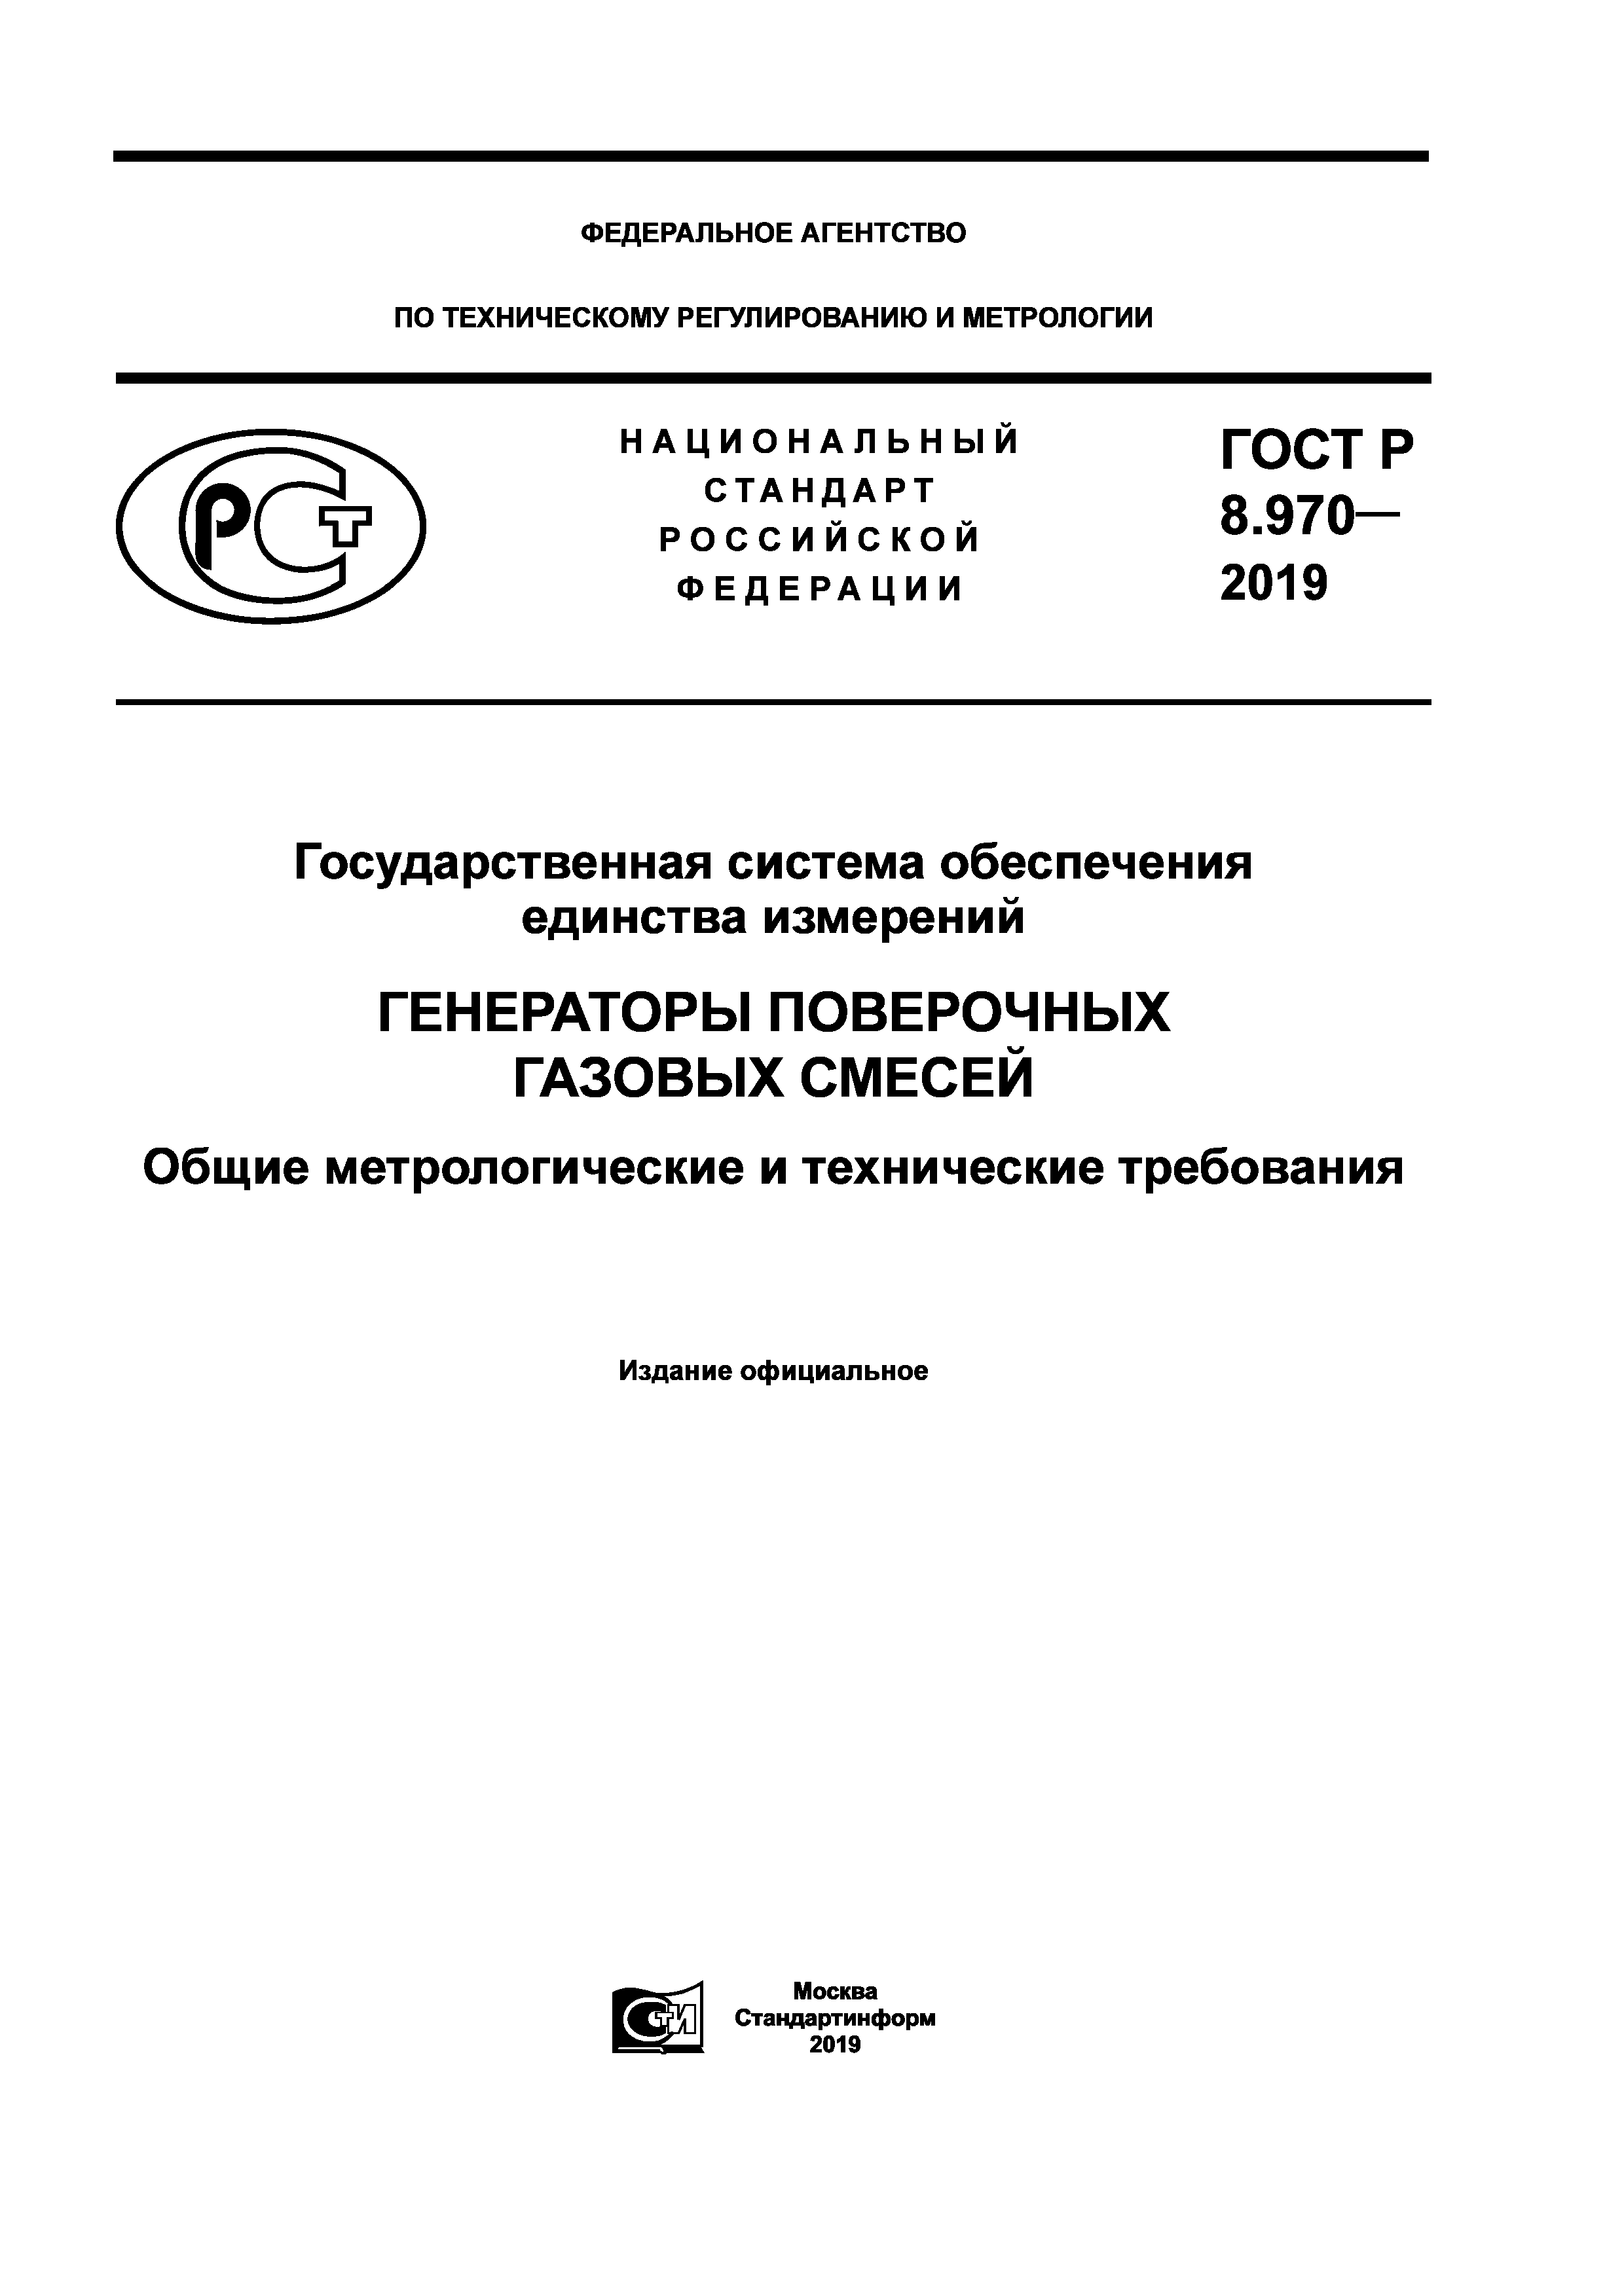 ГОСТ Р 8.970-2019